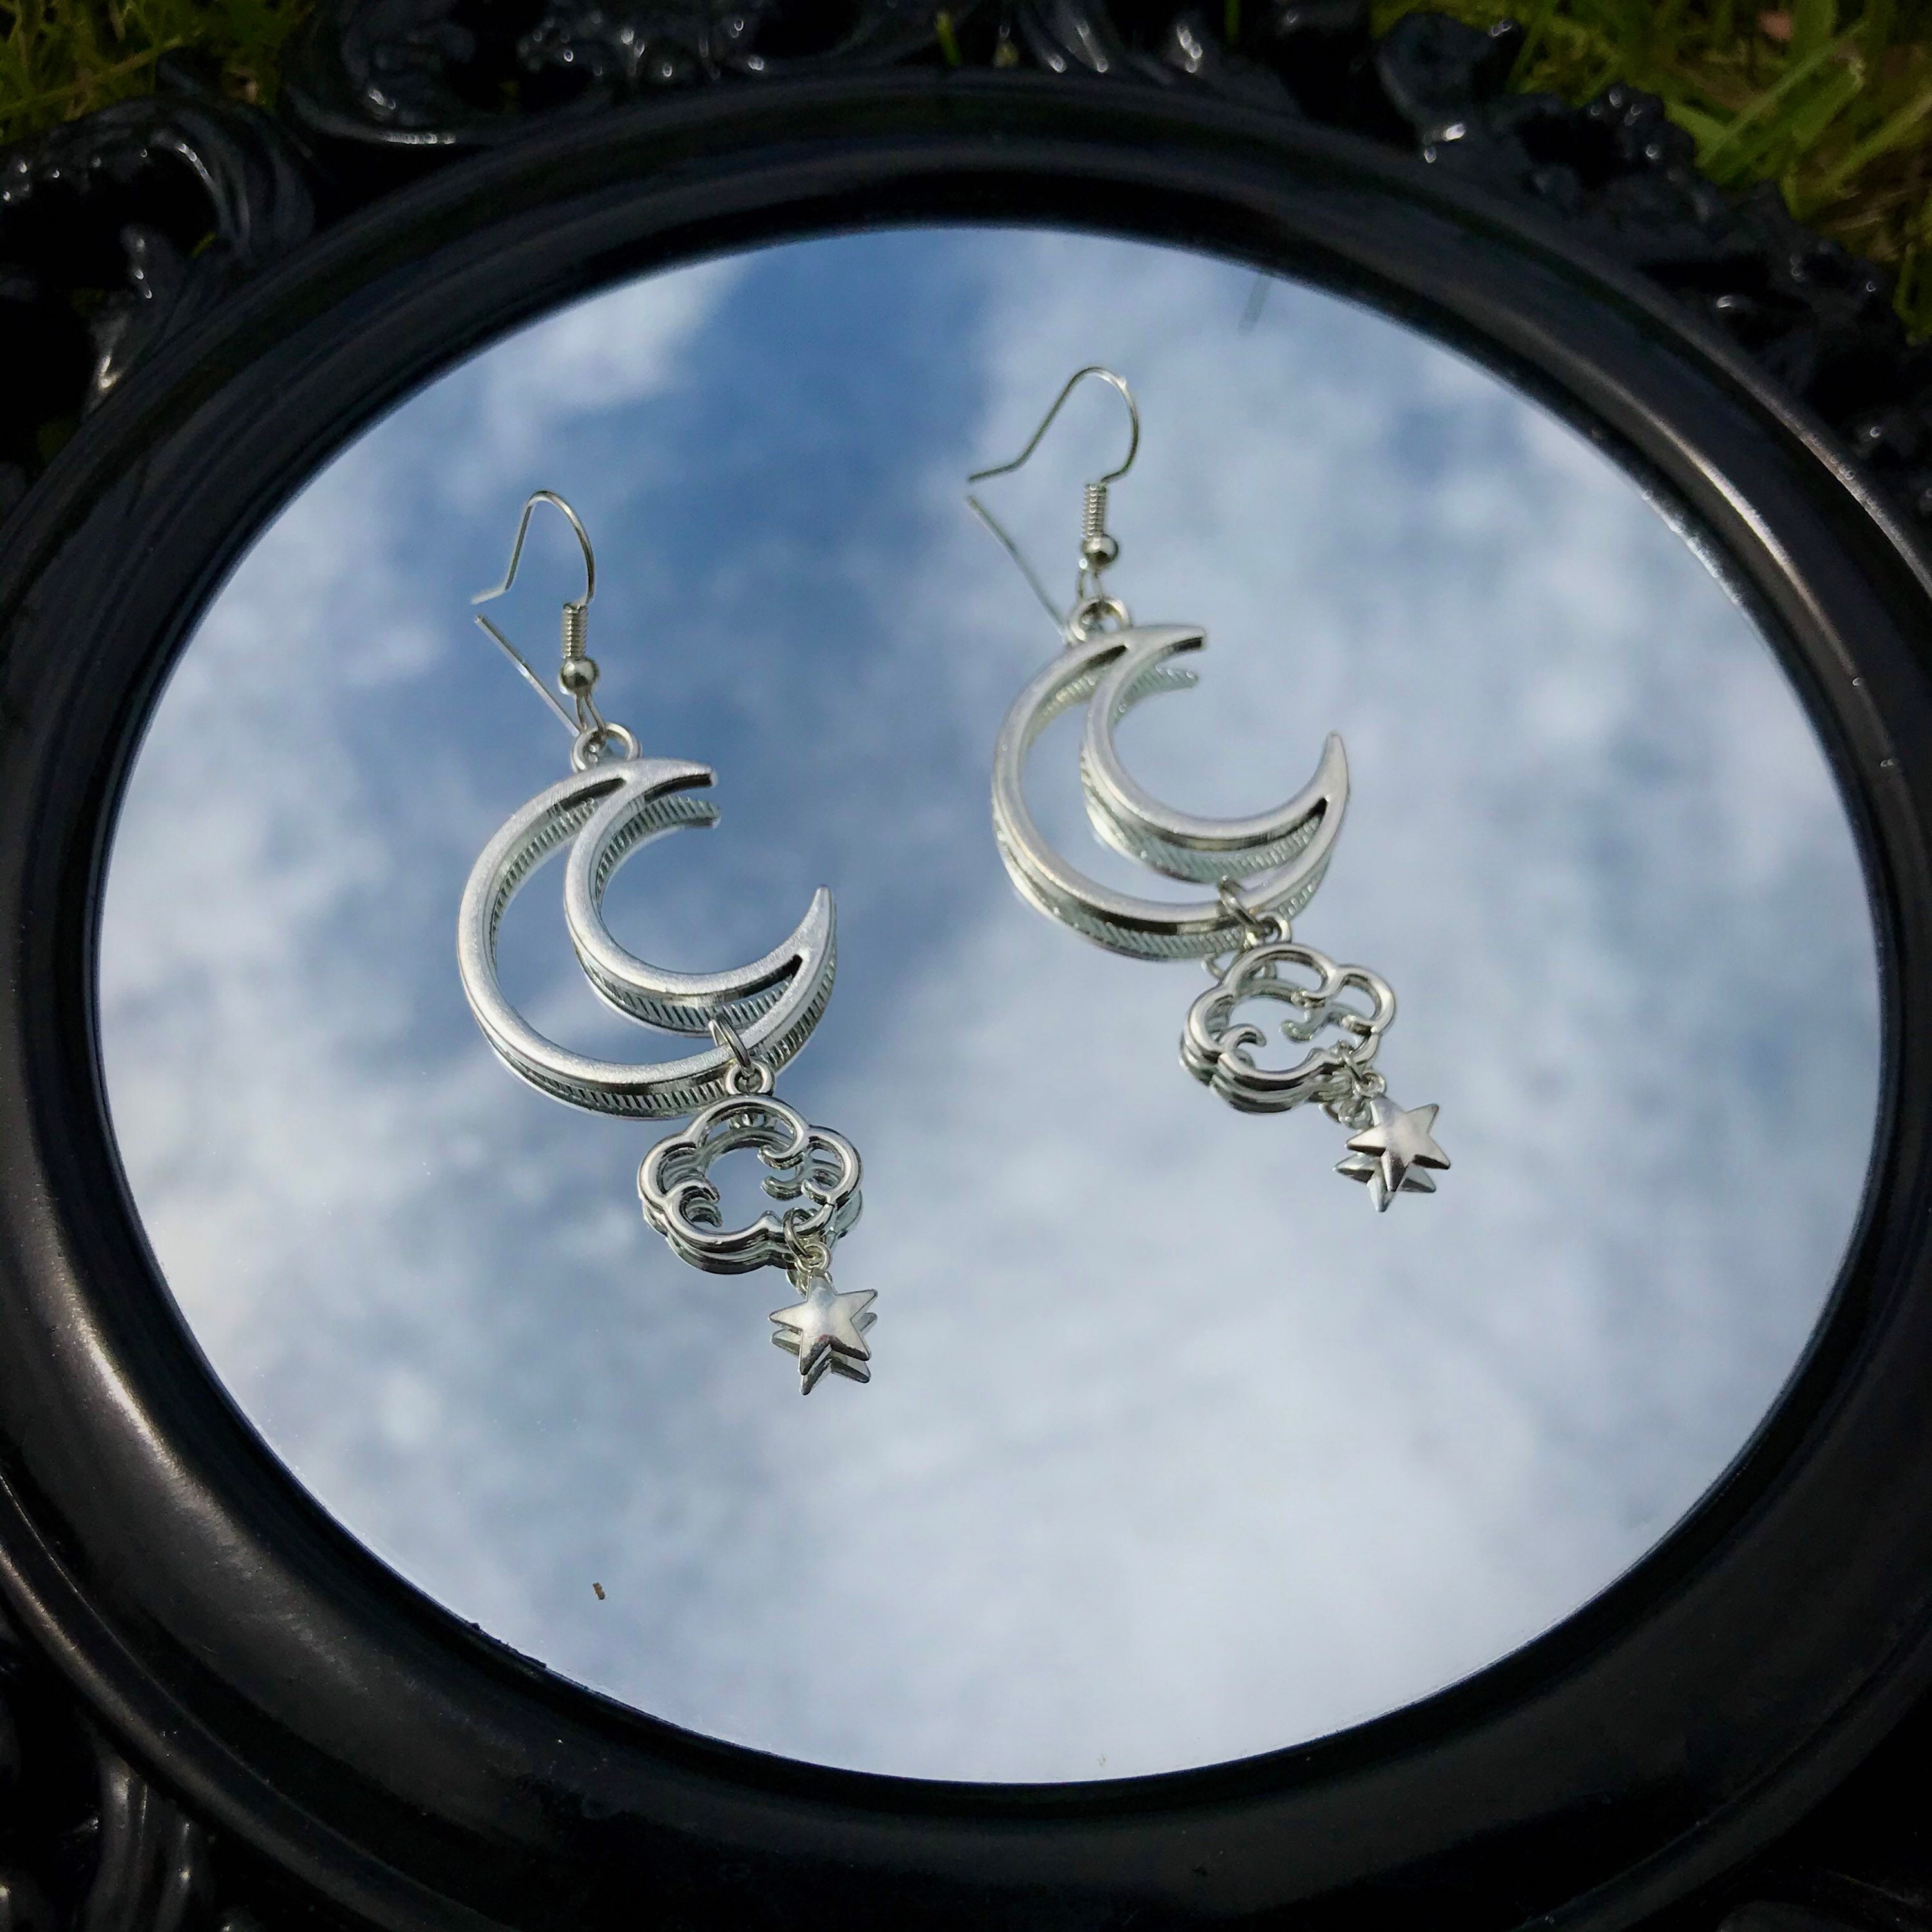 Ophelia by Pierre Black Glass Cabochon Necklace chain Pendant Wholesale